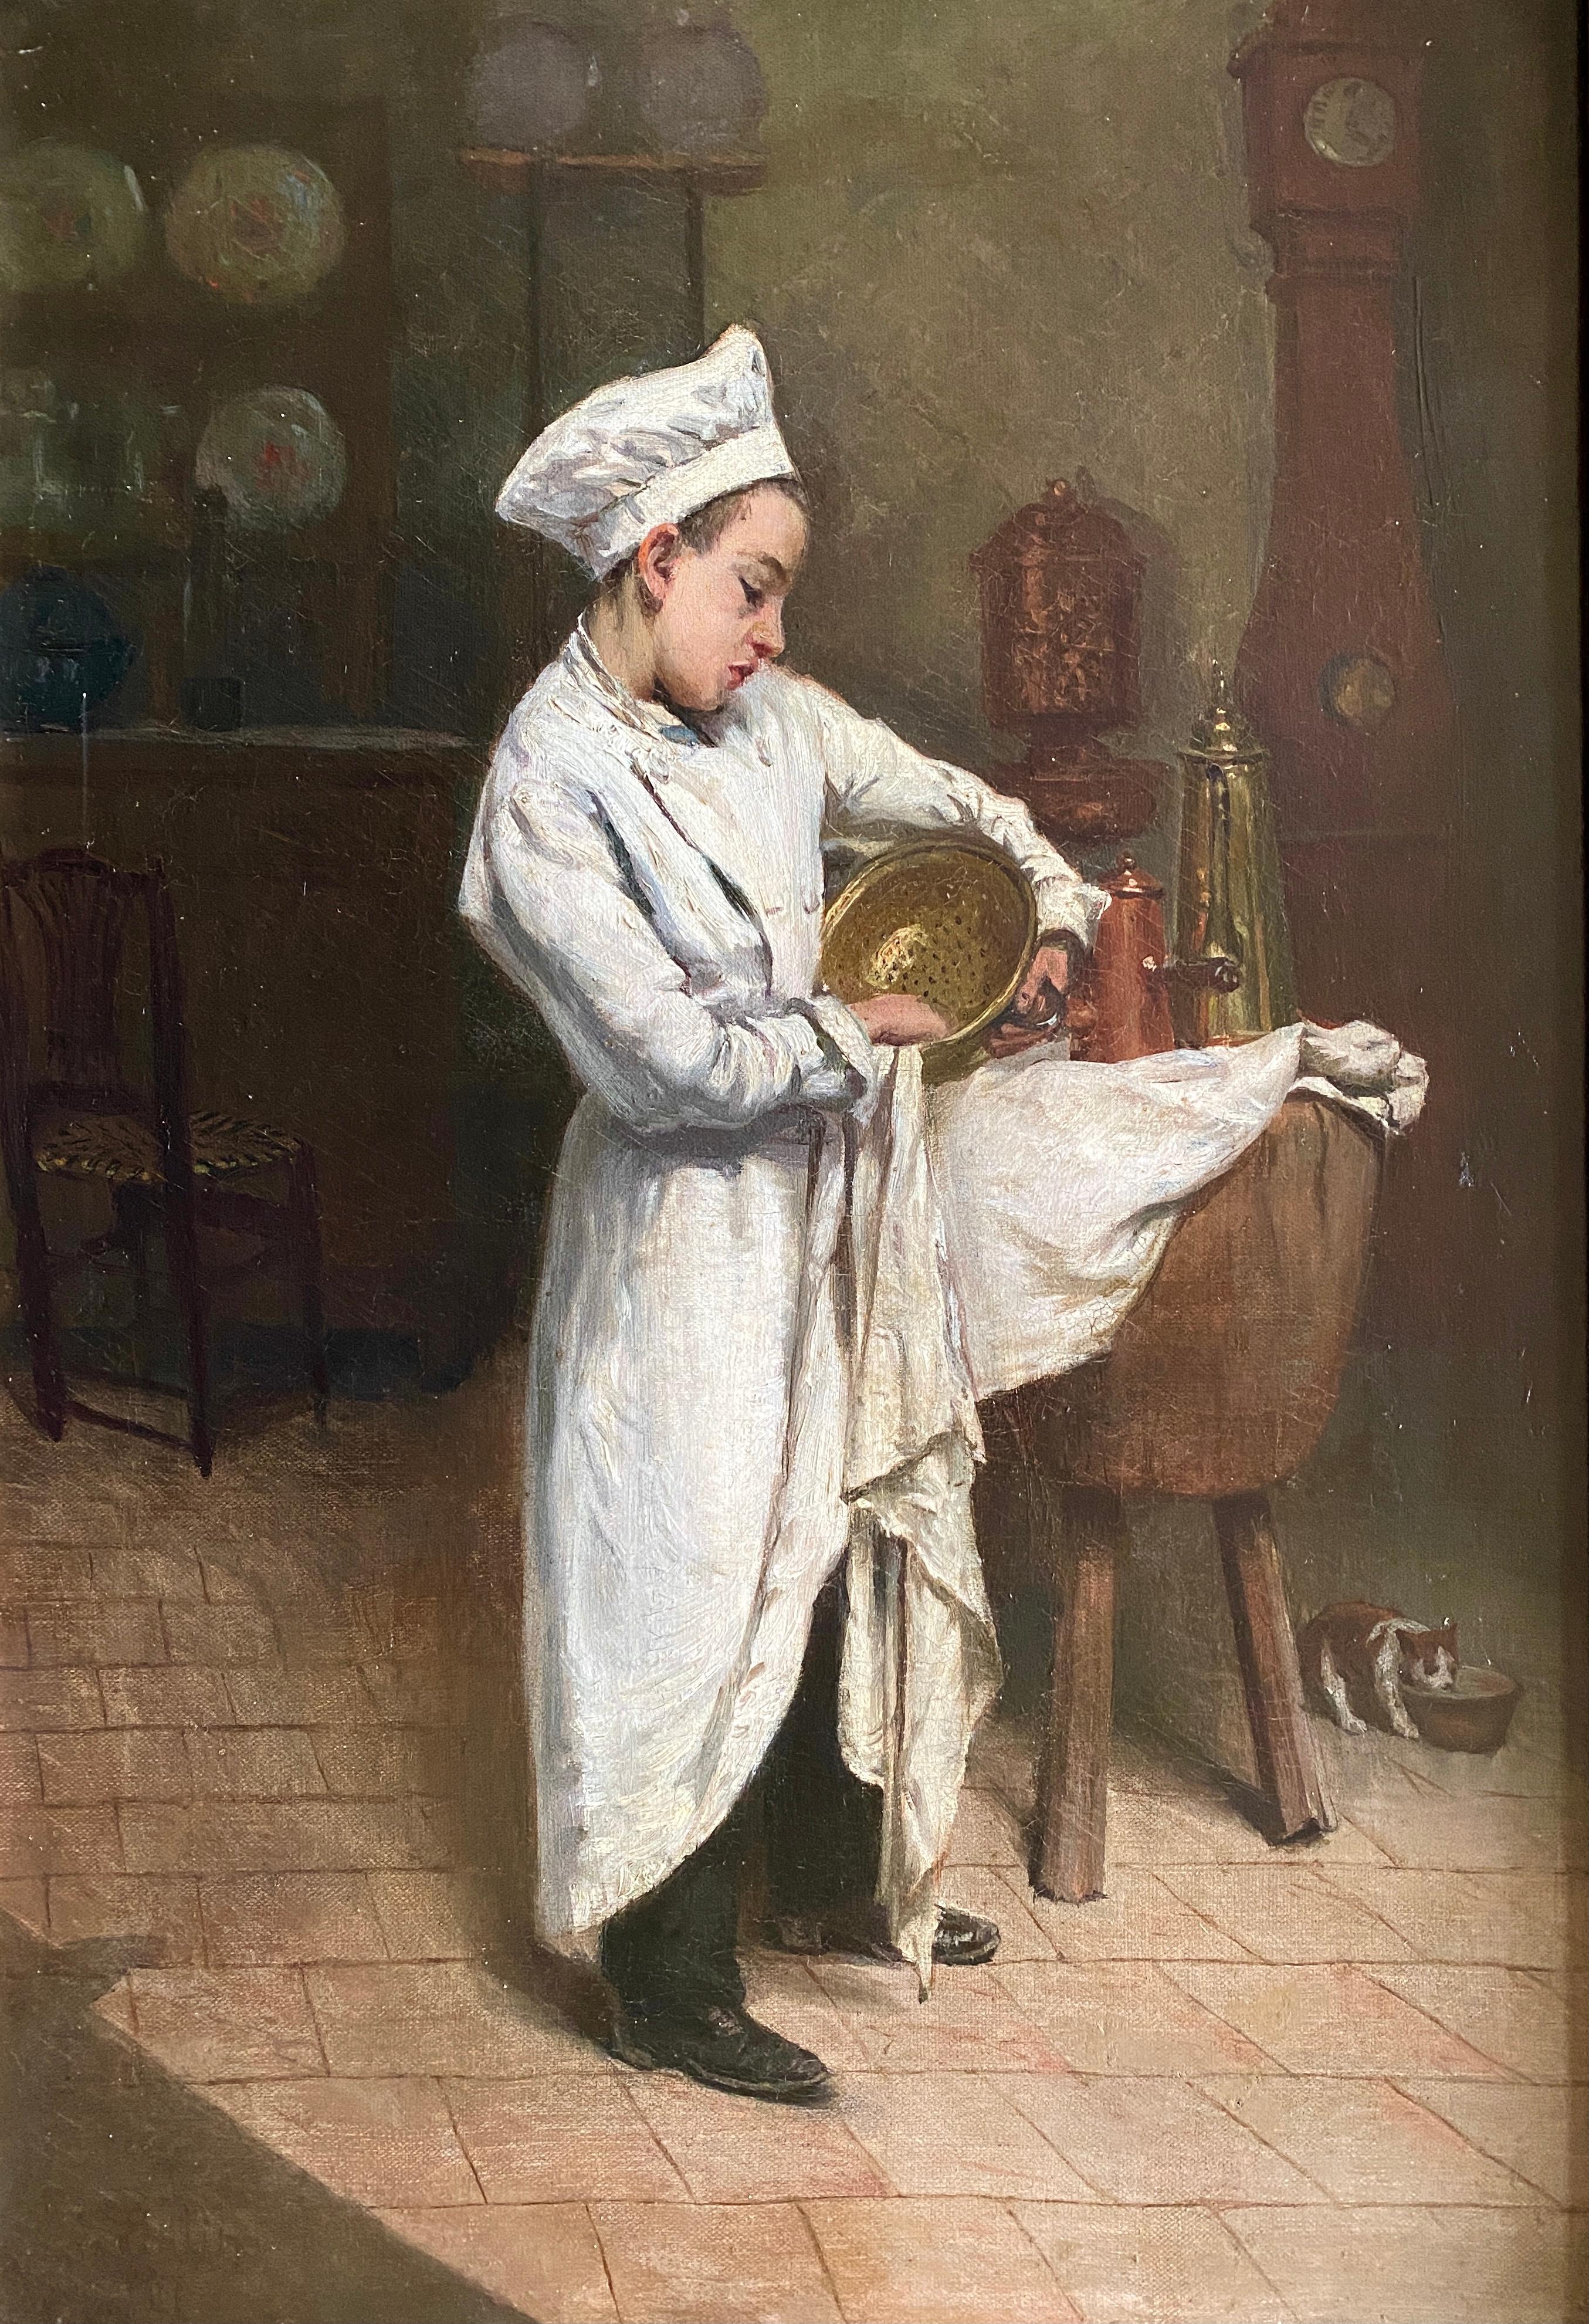 Le Petit Patissier, Henri Pottin, Paris 1820 – 1864, French Painter - Painting by Pottin Henri